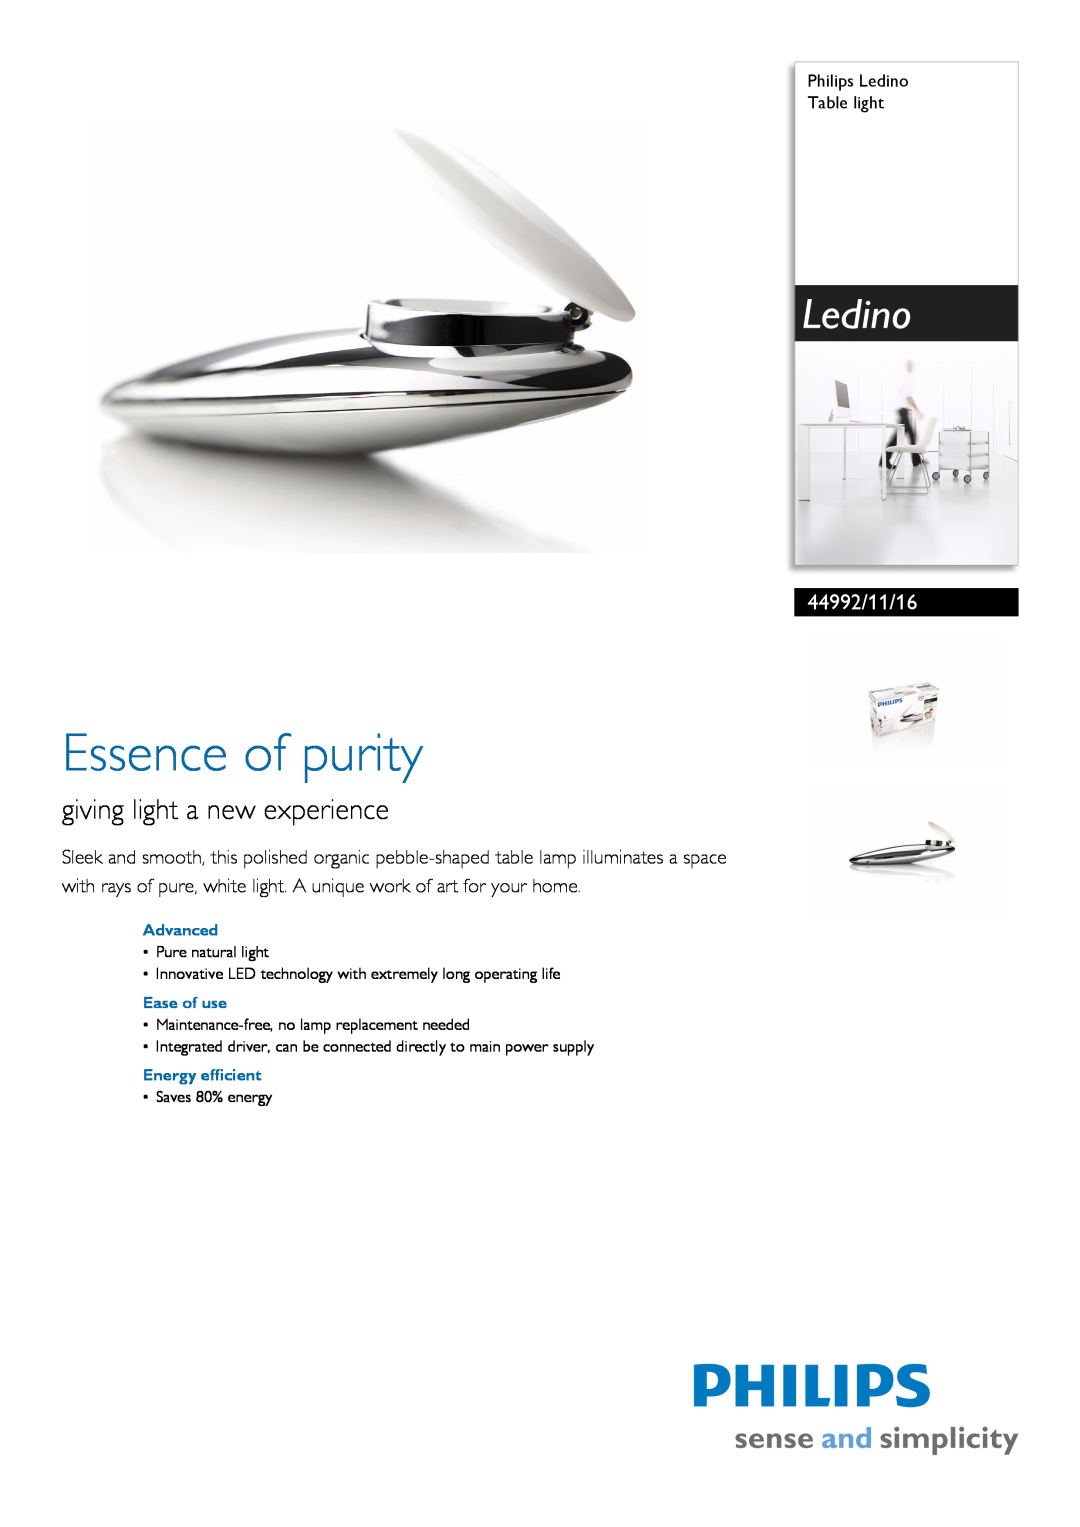 Philips 44992/11/16 manual Philips Ledino Table light, Advanced, Ease of use, Energy efficient, Essence of purity 